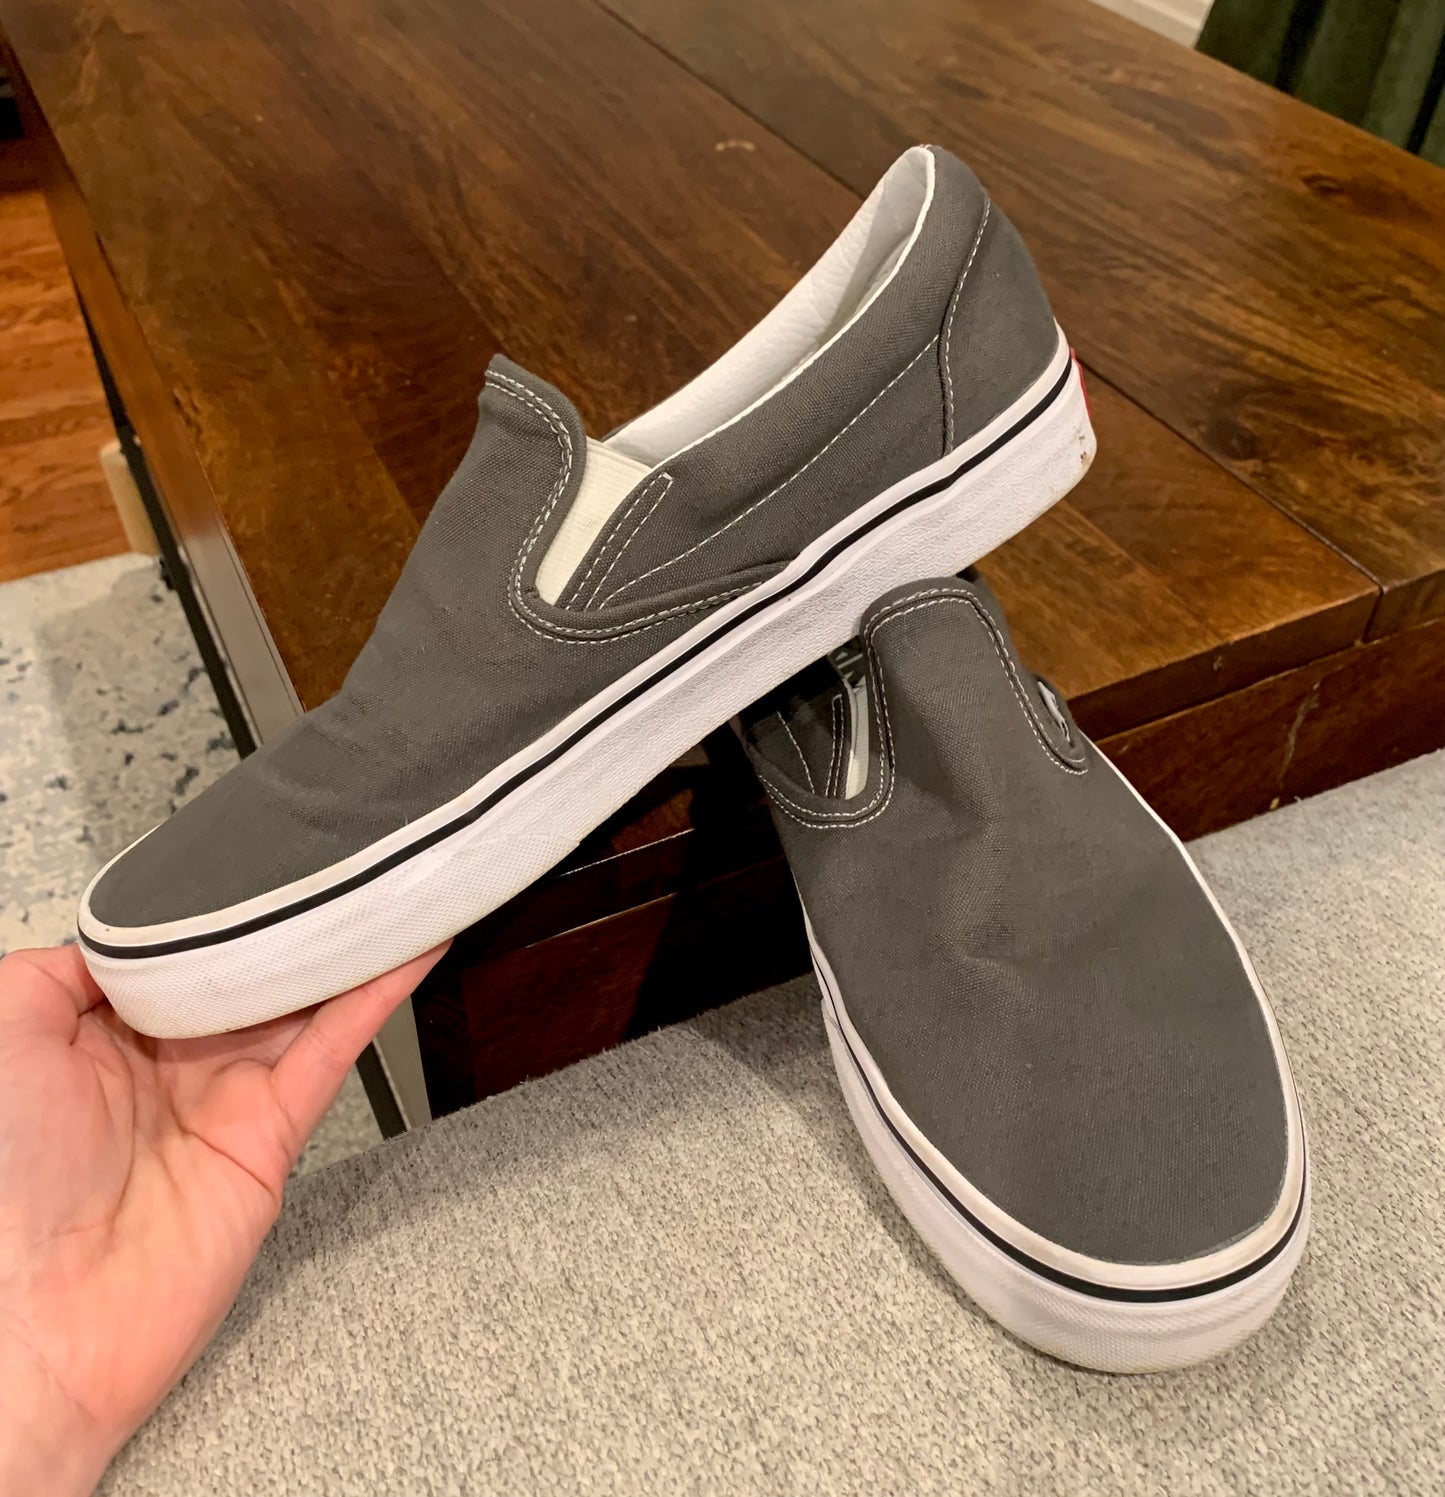 Men’s VANS size 10, Grey Slip-Ons, Rarely ever worn